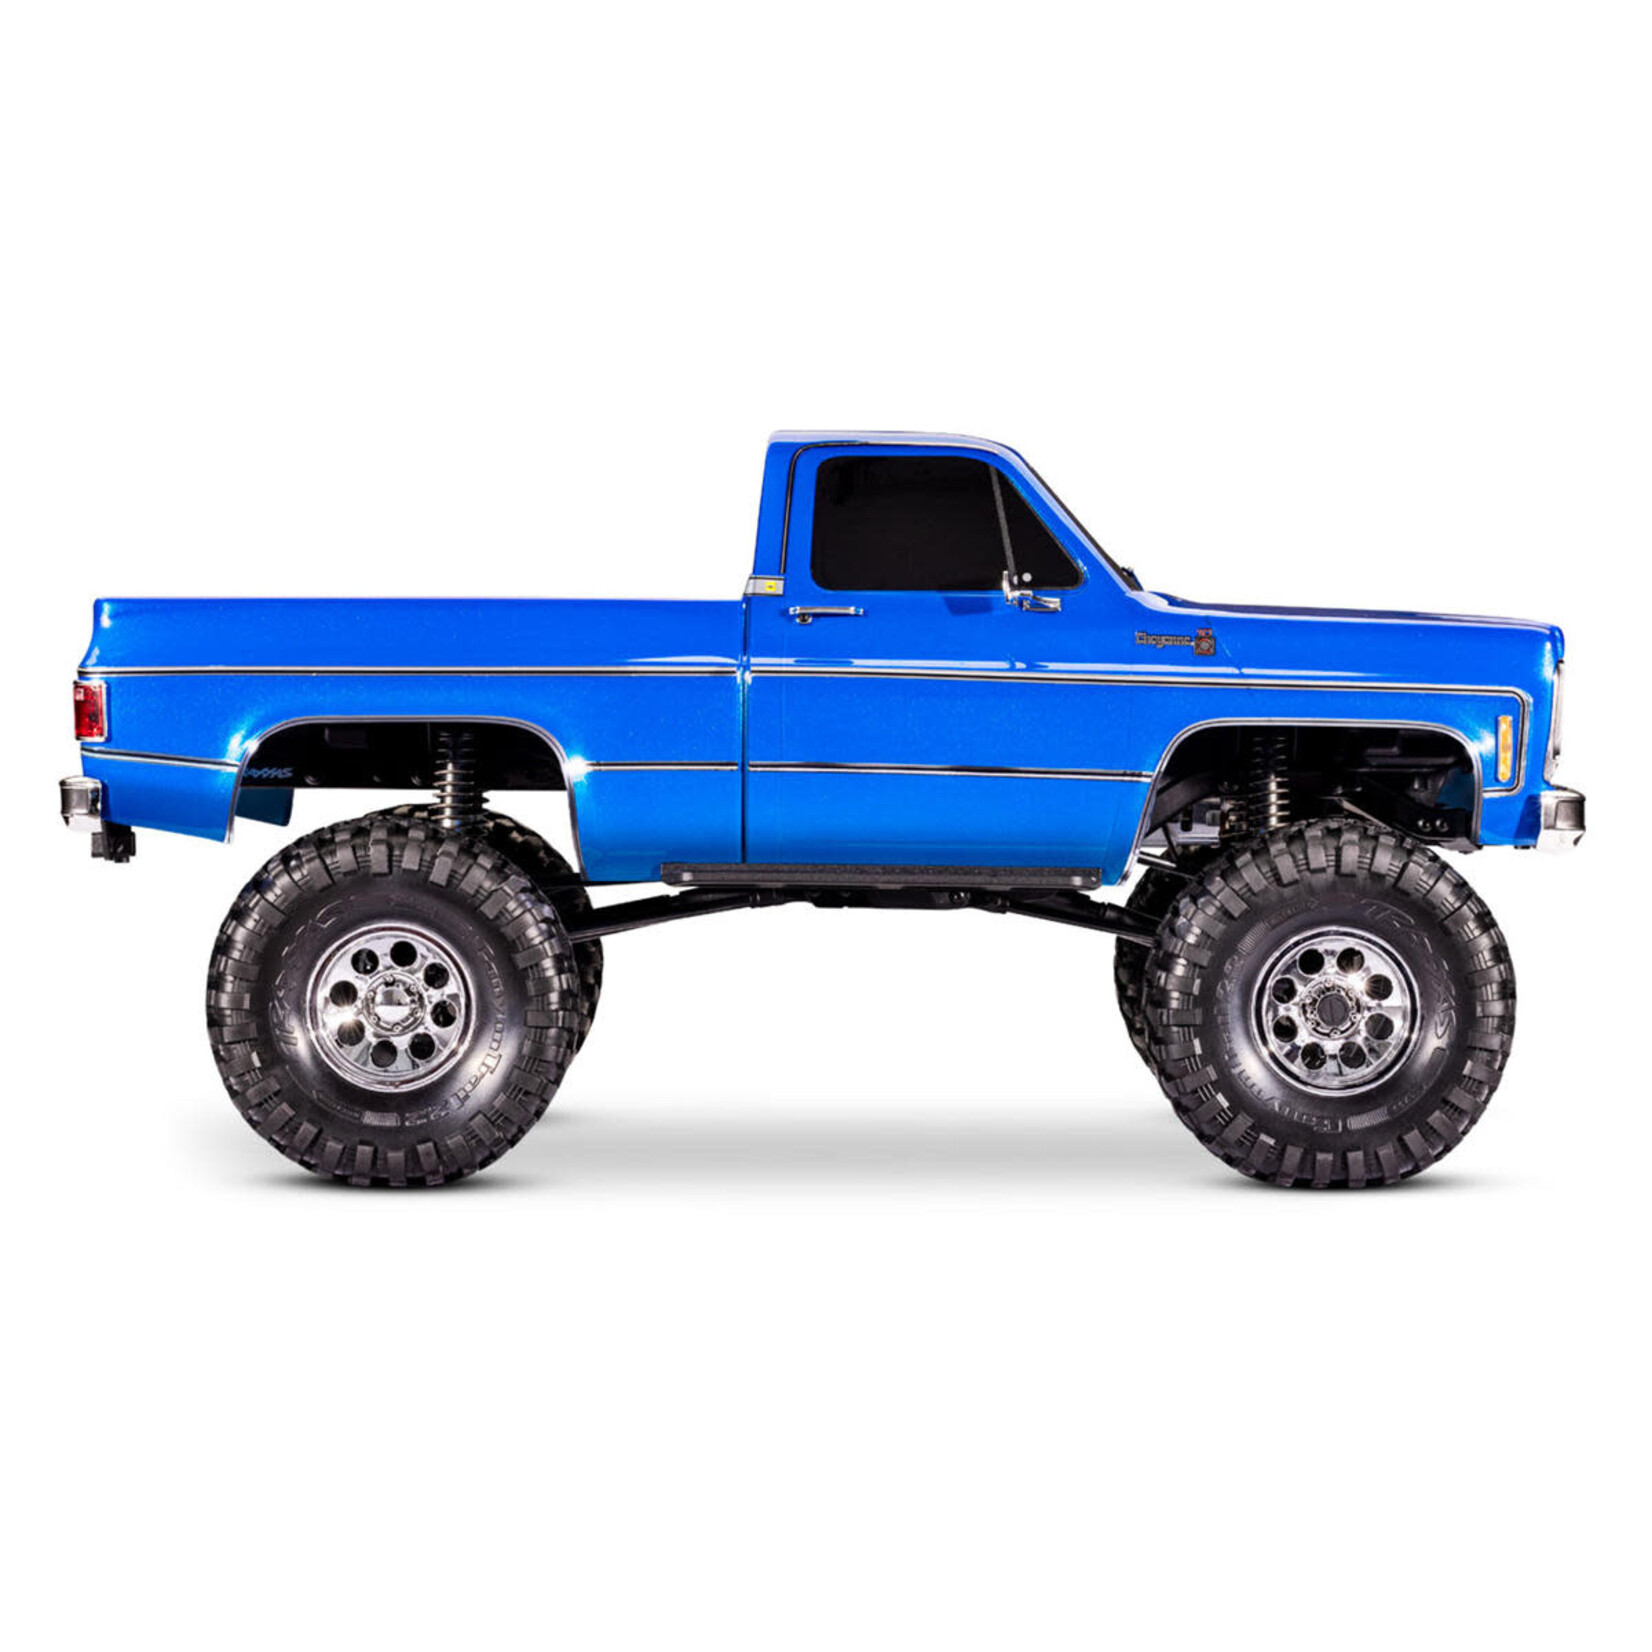 Traxxas Traxxas TRX-4 1/10 High Trail Edition RC Crawler w/'79 Chevy K10 Truck Body (Blue) &/TQi 2.4GHz Radio #92056-4-BLUE